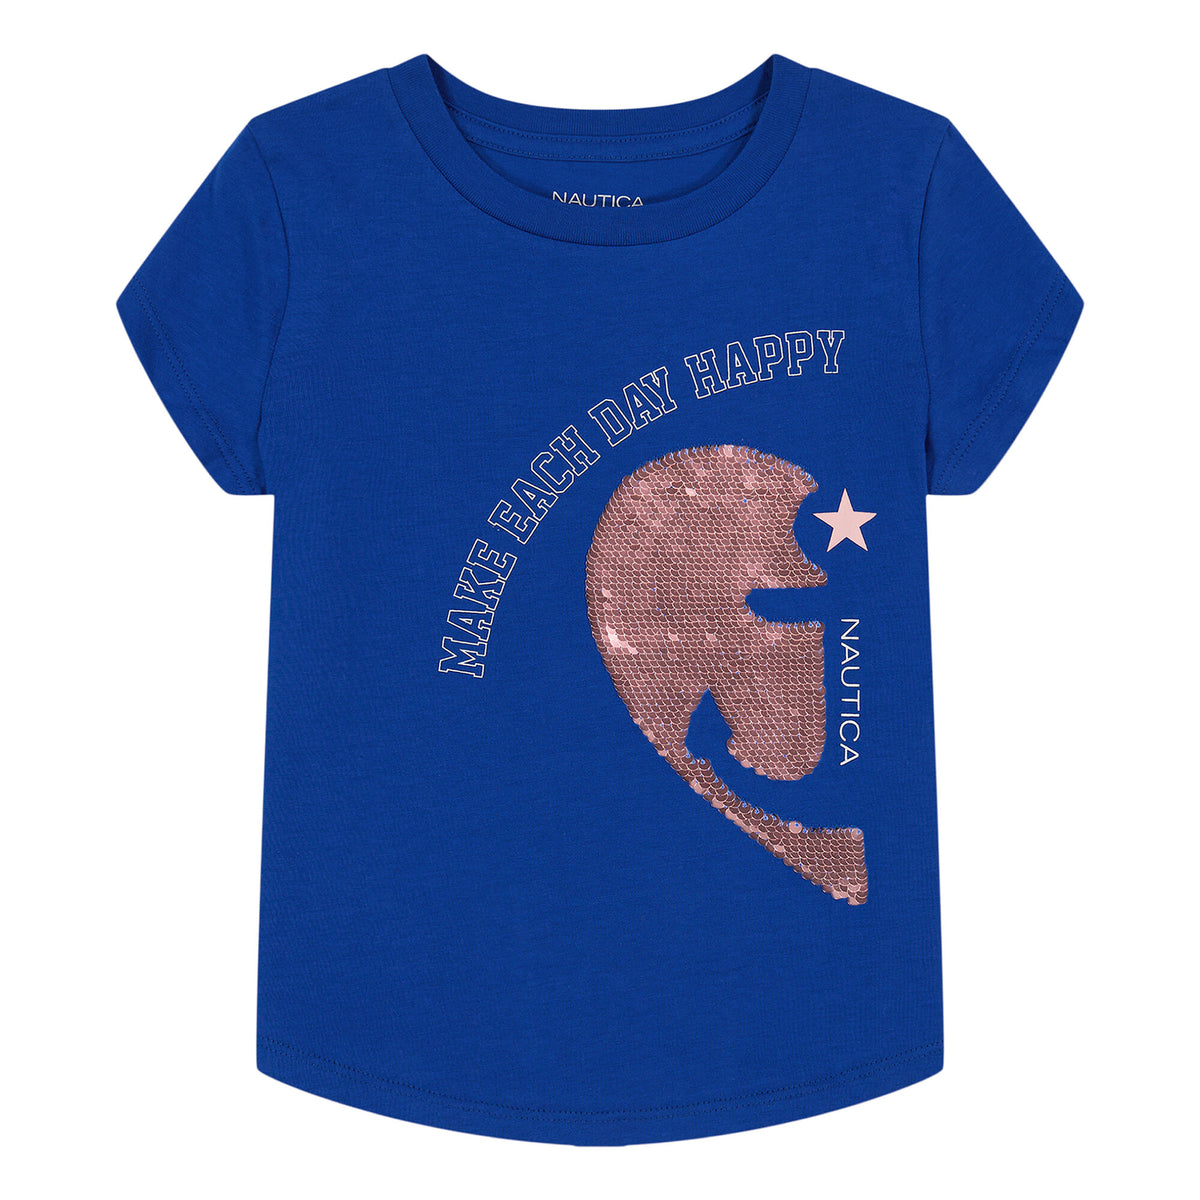 Nautica Toddler Girls' Make Each Day Happy T-Shirt (2T-4T) Horizon Blue